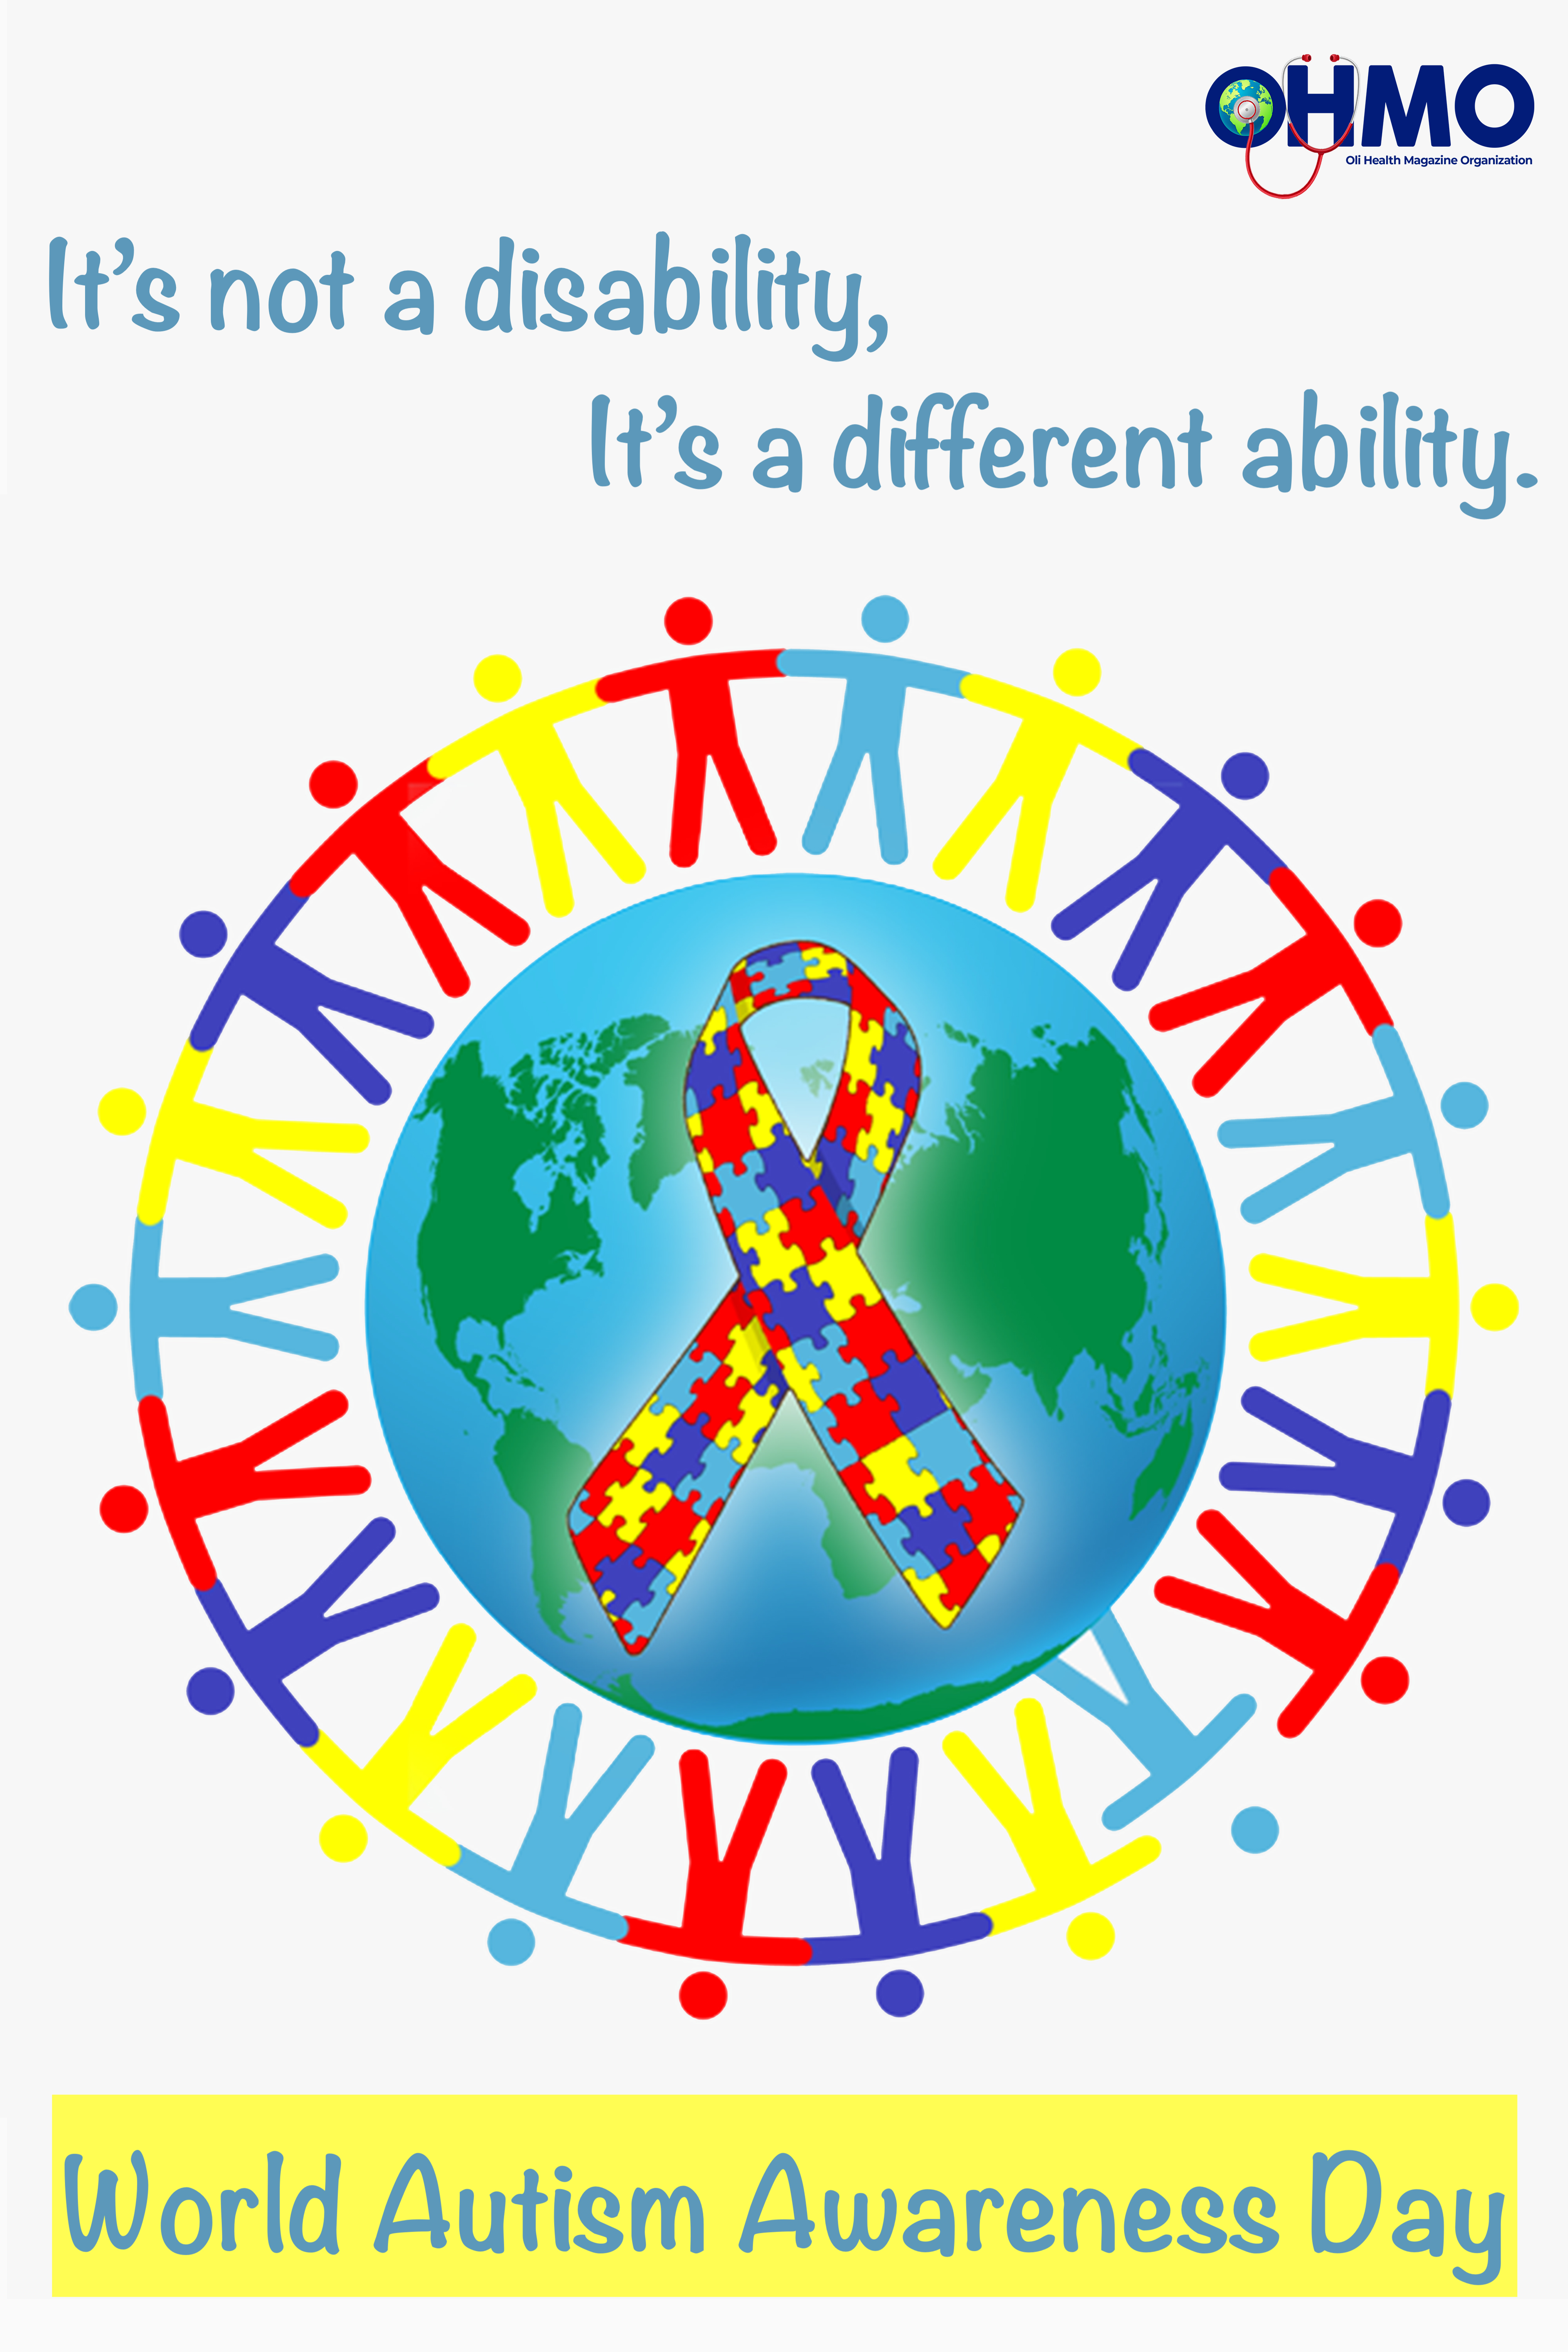 World Autism Awareness Day 2021